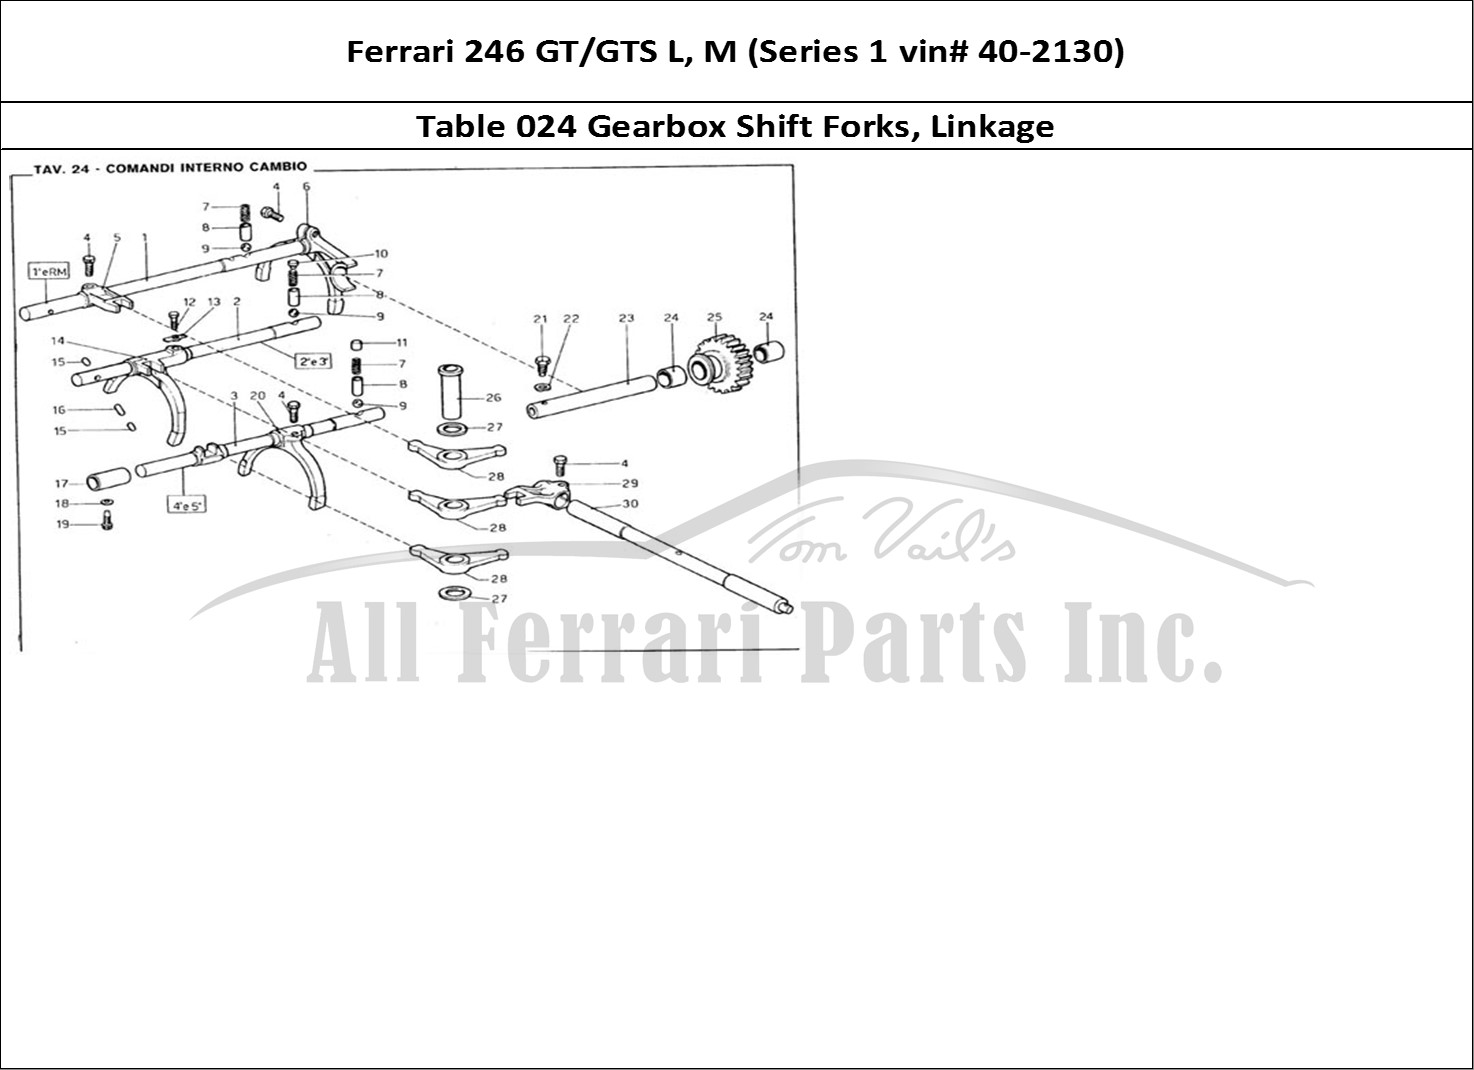 Ferrari Parts Ferrari 246 GT Series 1 Page 024 Gearbox Inner Controls